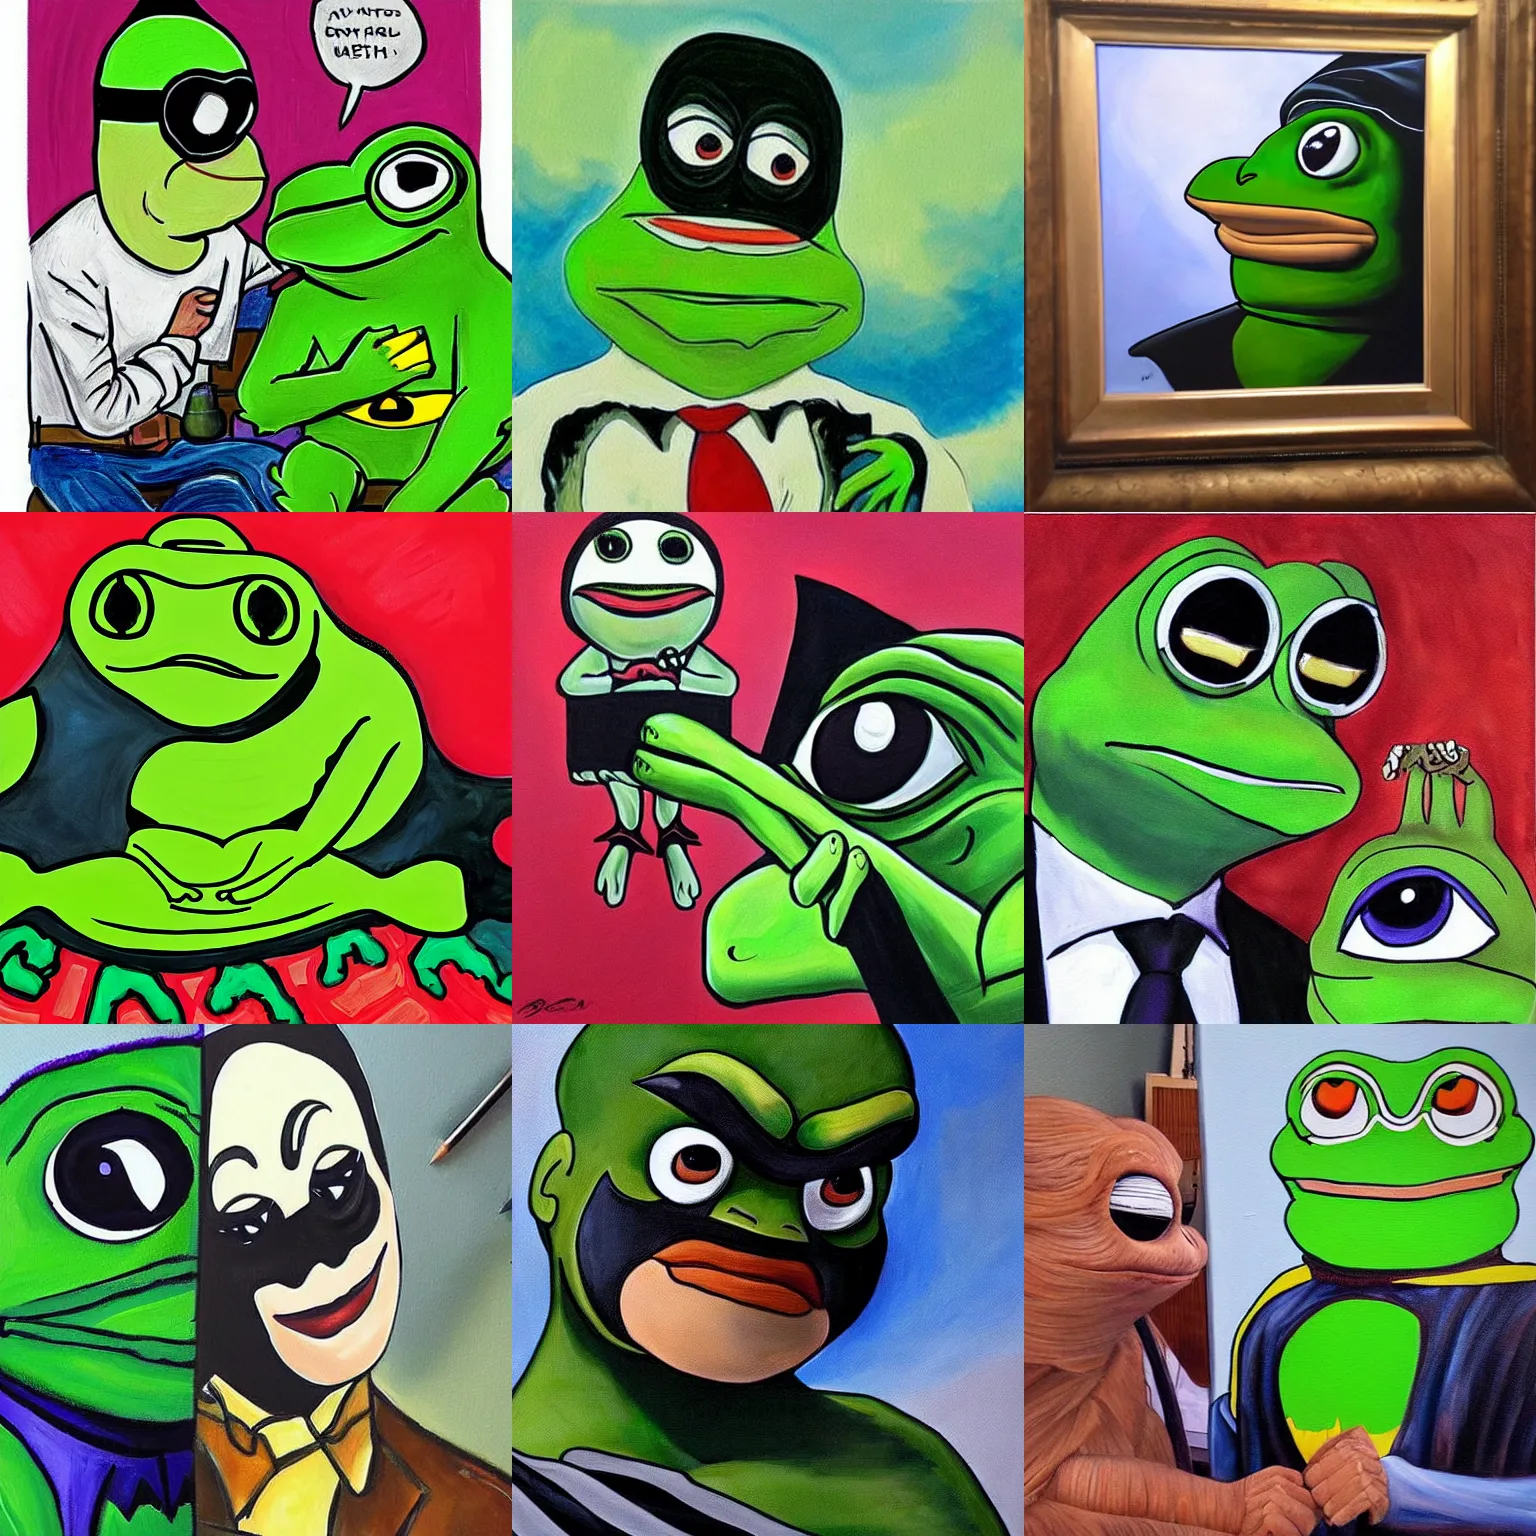 Prompt: beautiful painting of pepe the frog meeting batman